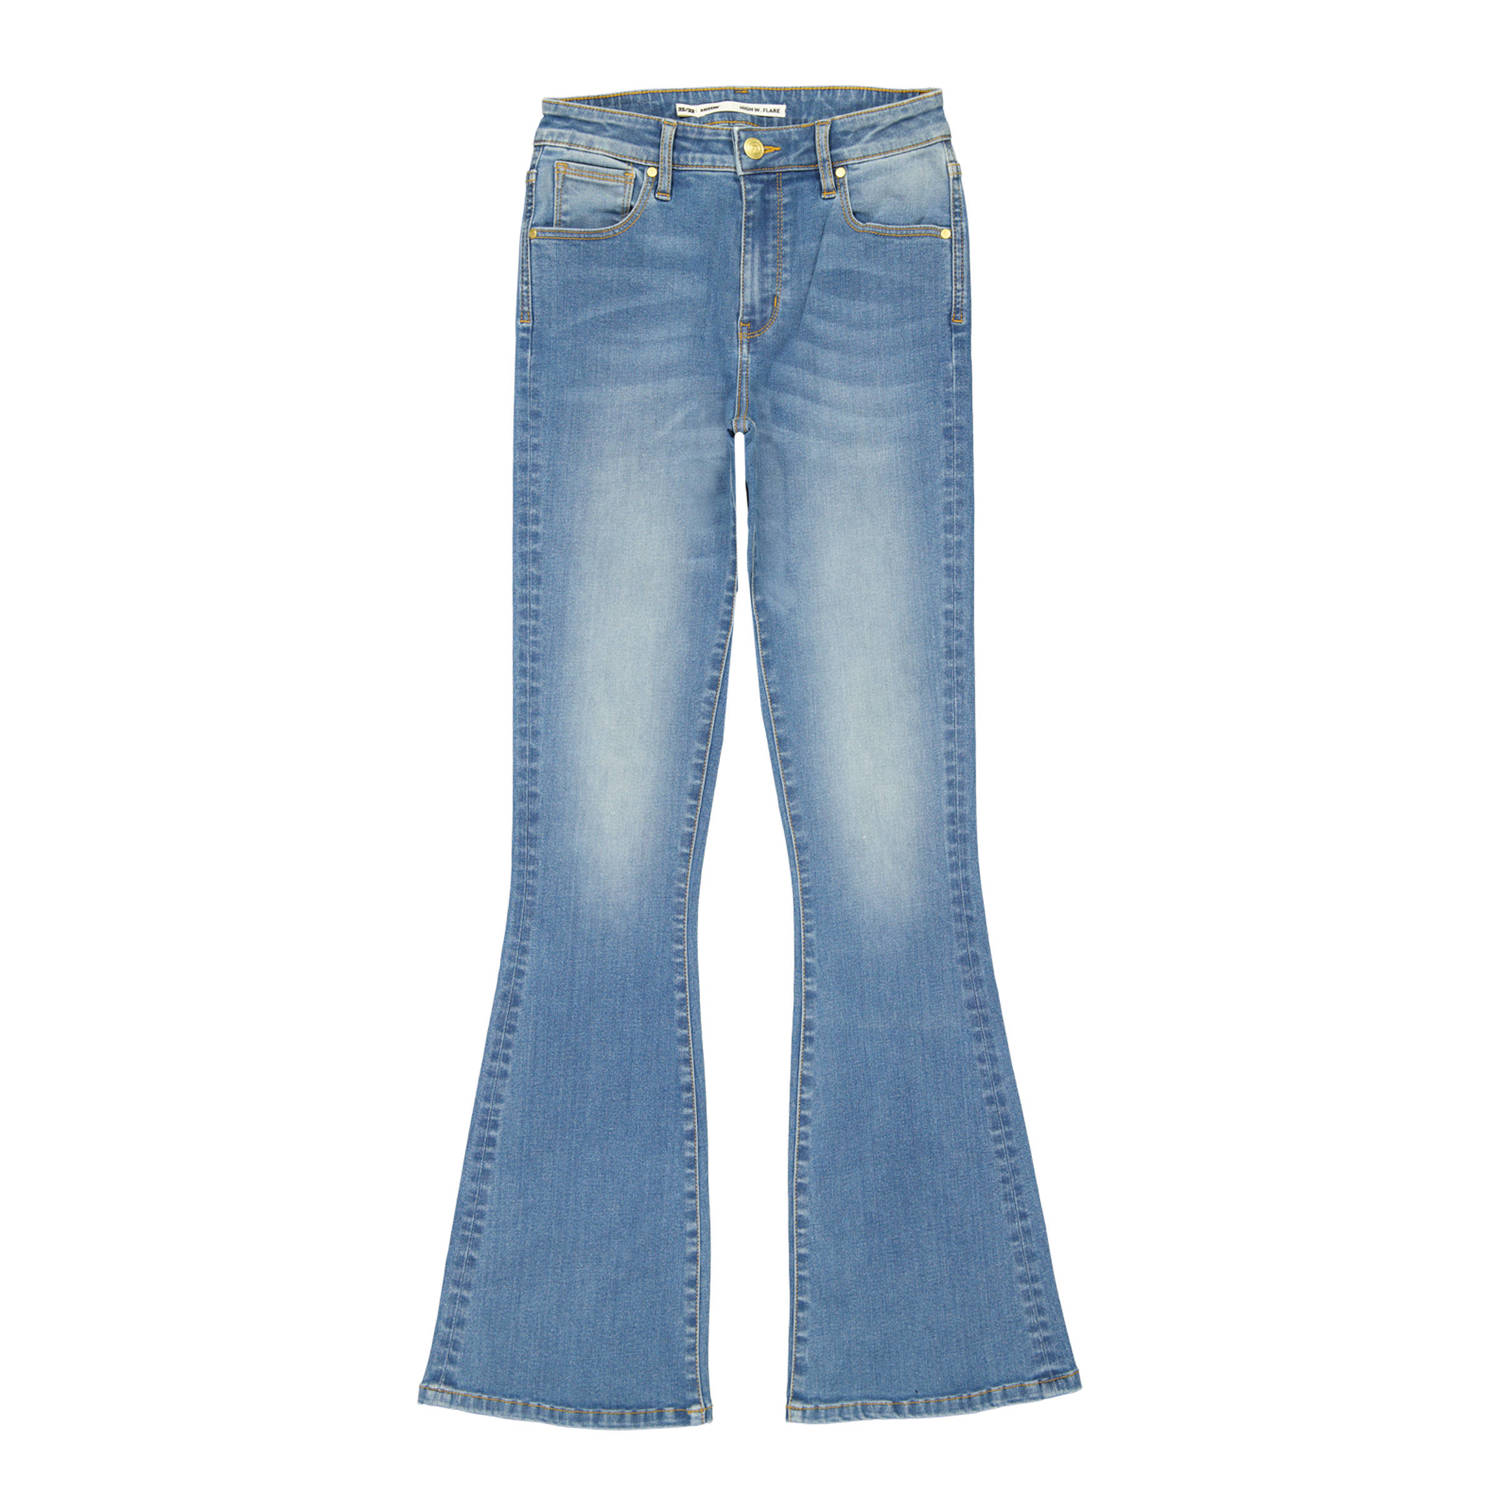 Raizzed high waist flared jeans Sunrise light blue denim